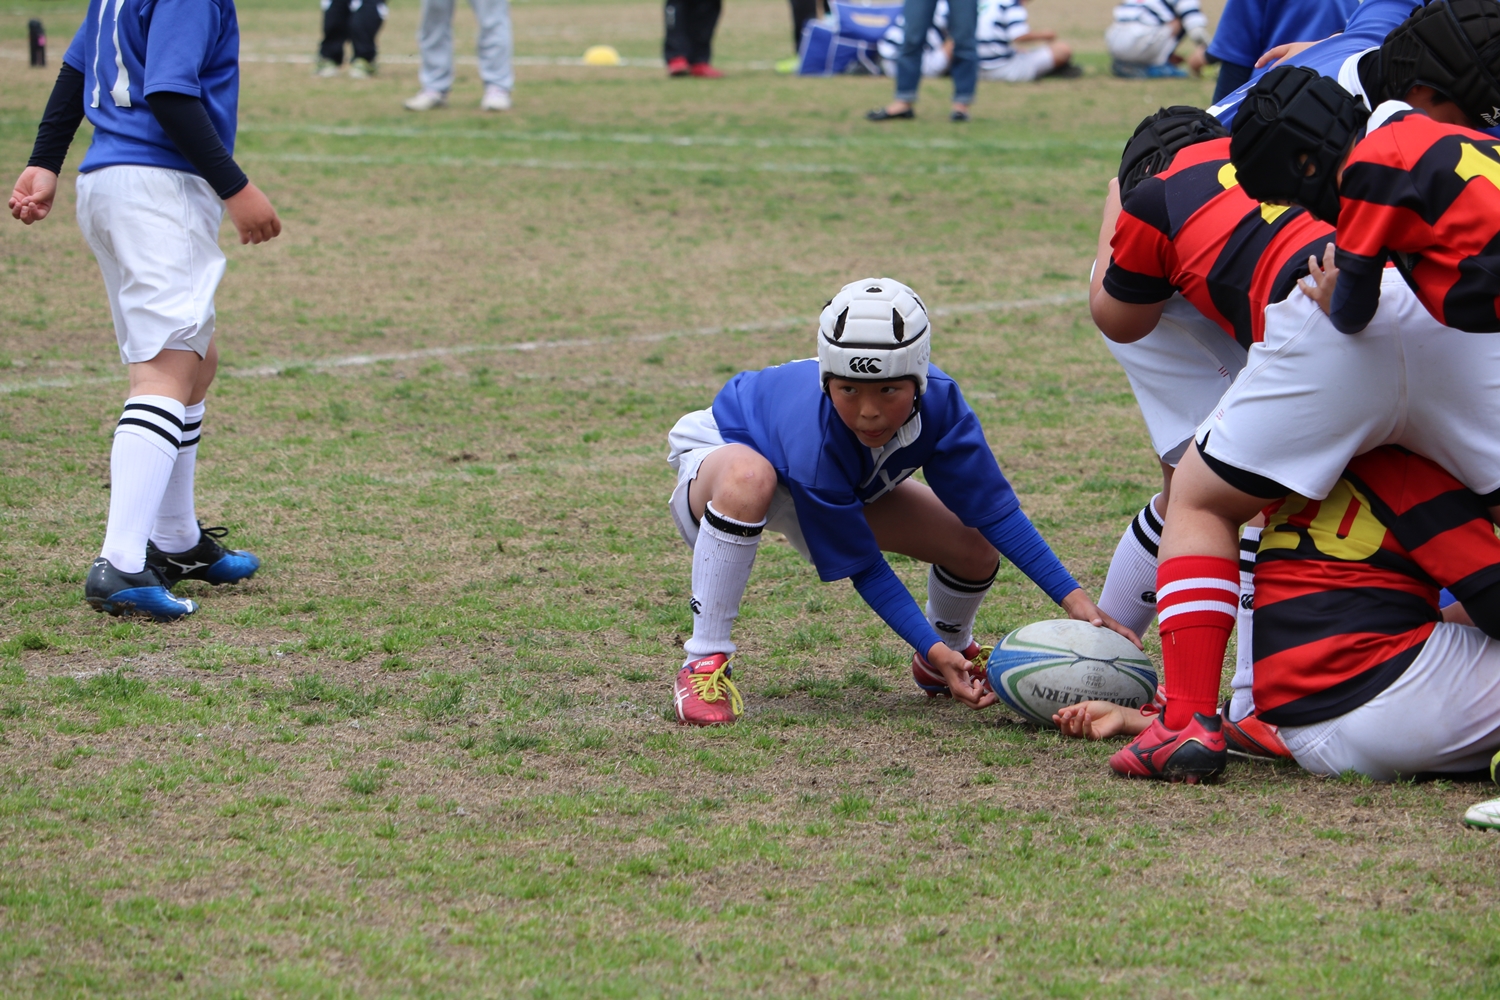 youngwave_kitakyusyu_rugby_school_kasugahai2016046.JPG